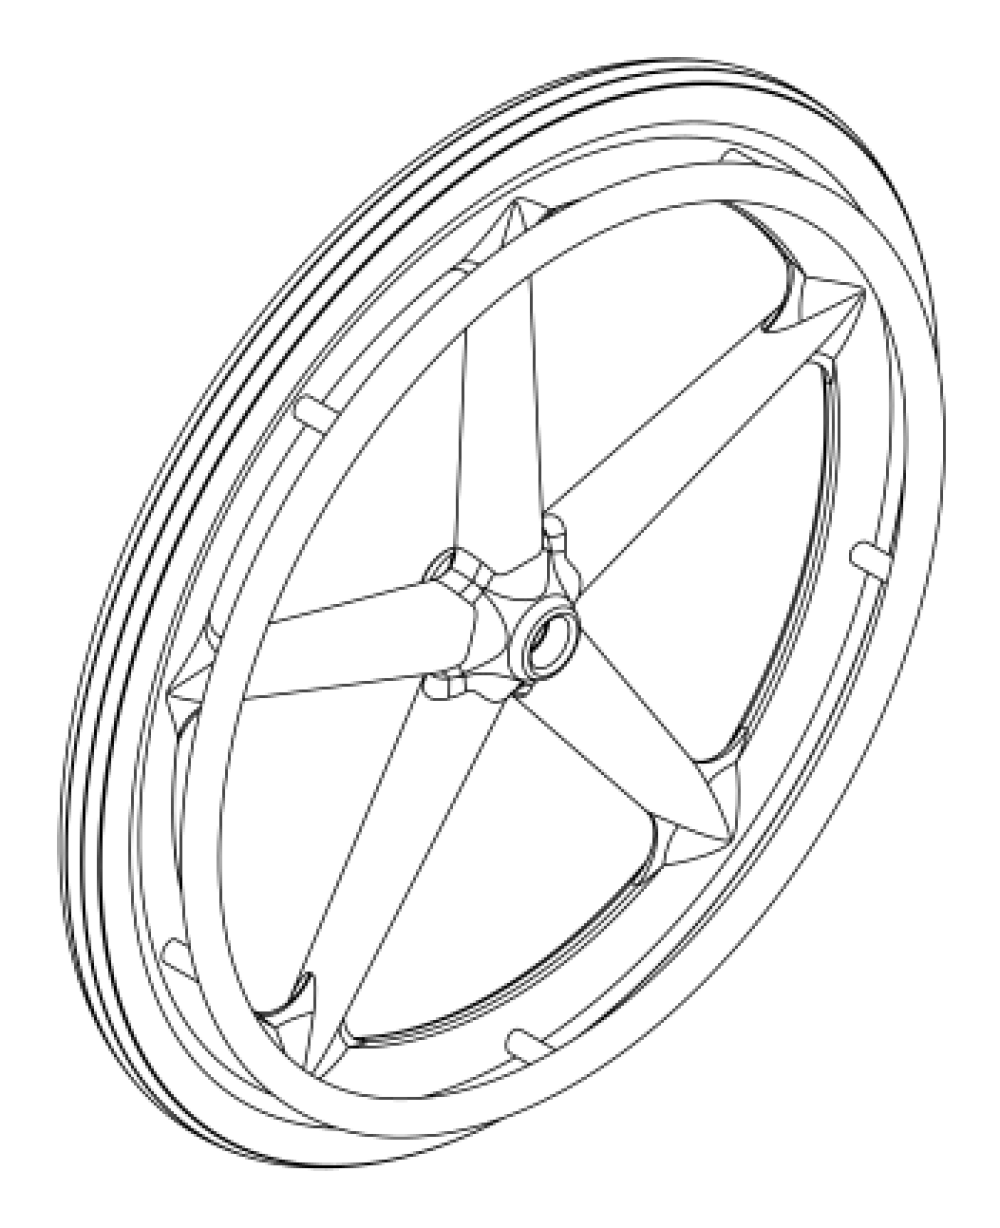 (discontinued) Focus / Flip Mag Wheel / Tire / Handrim Kits parts diagram